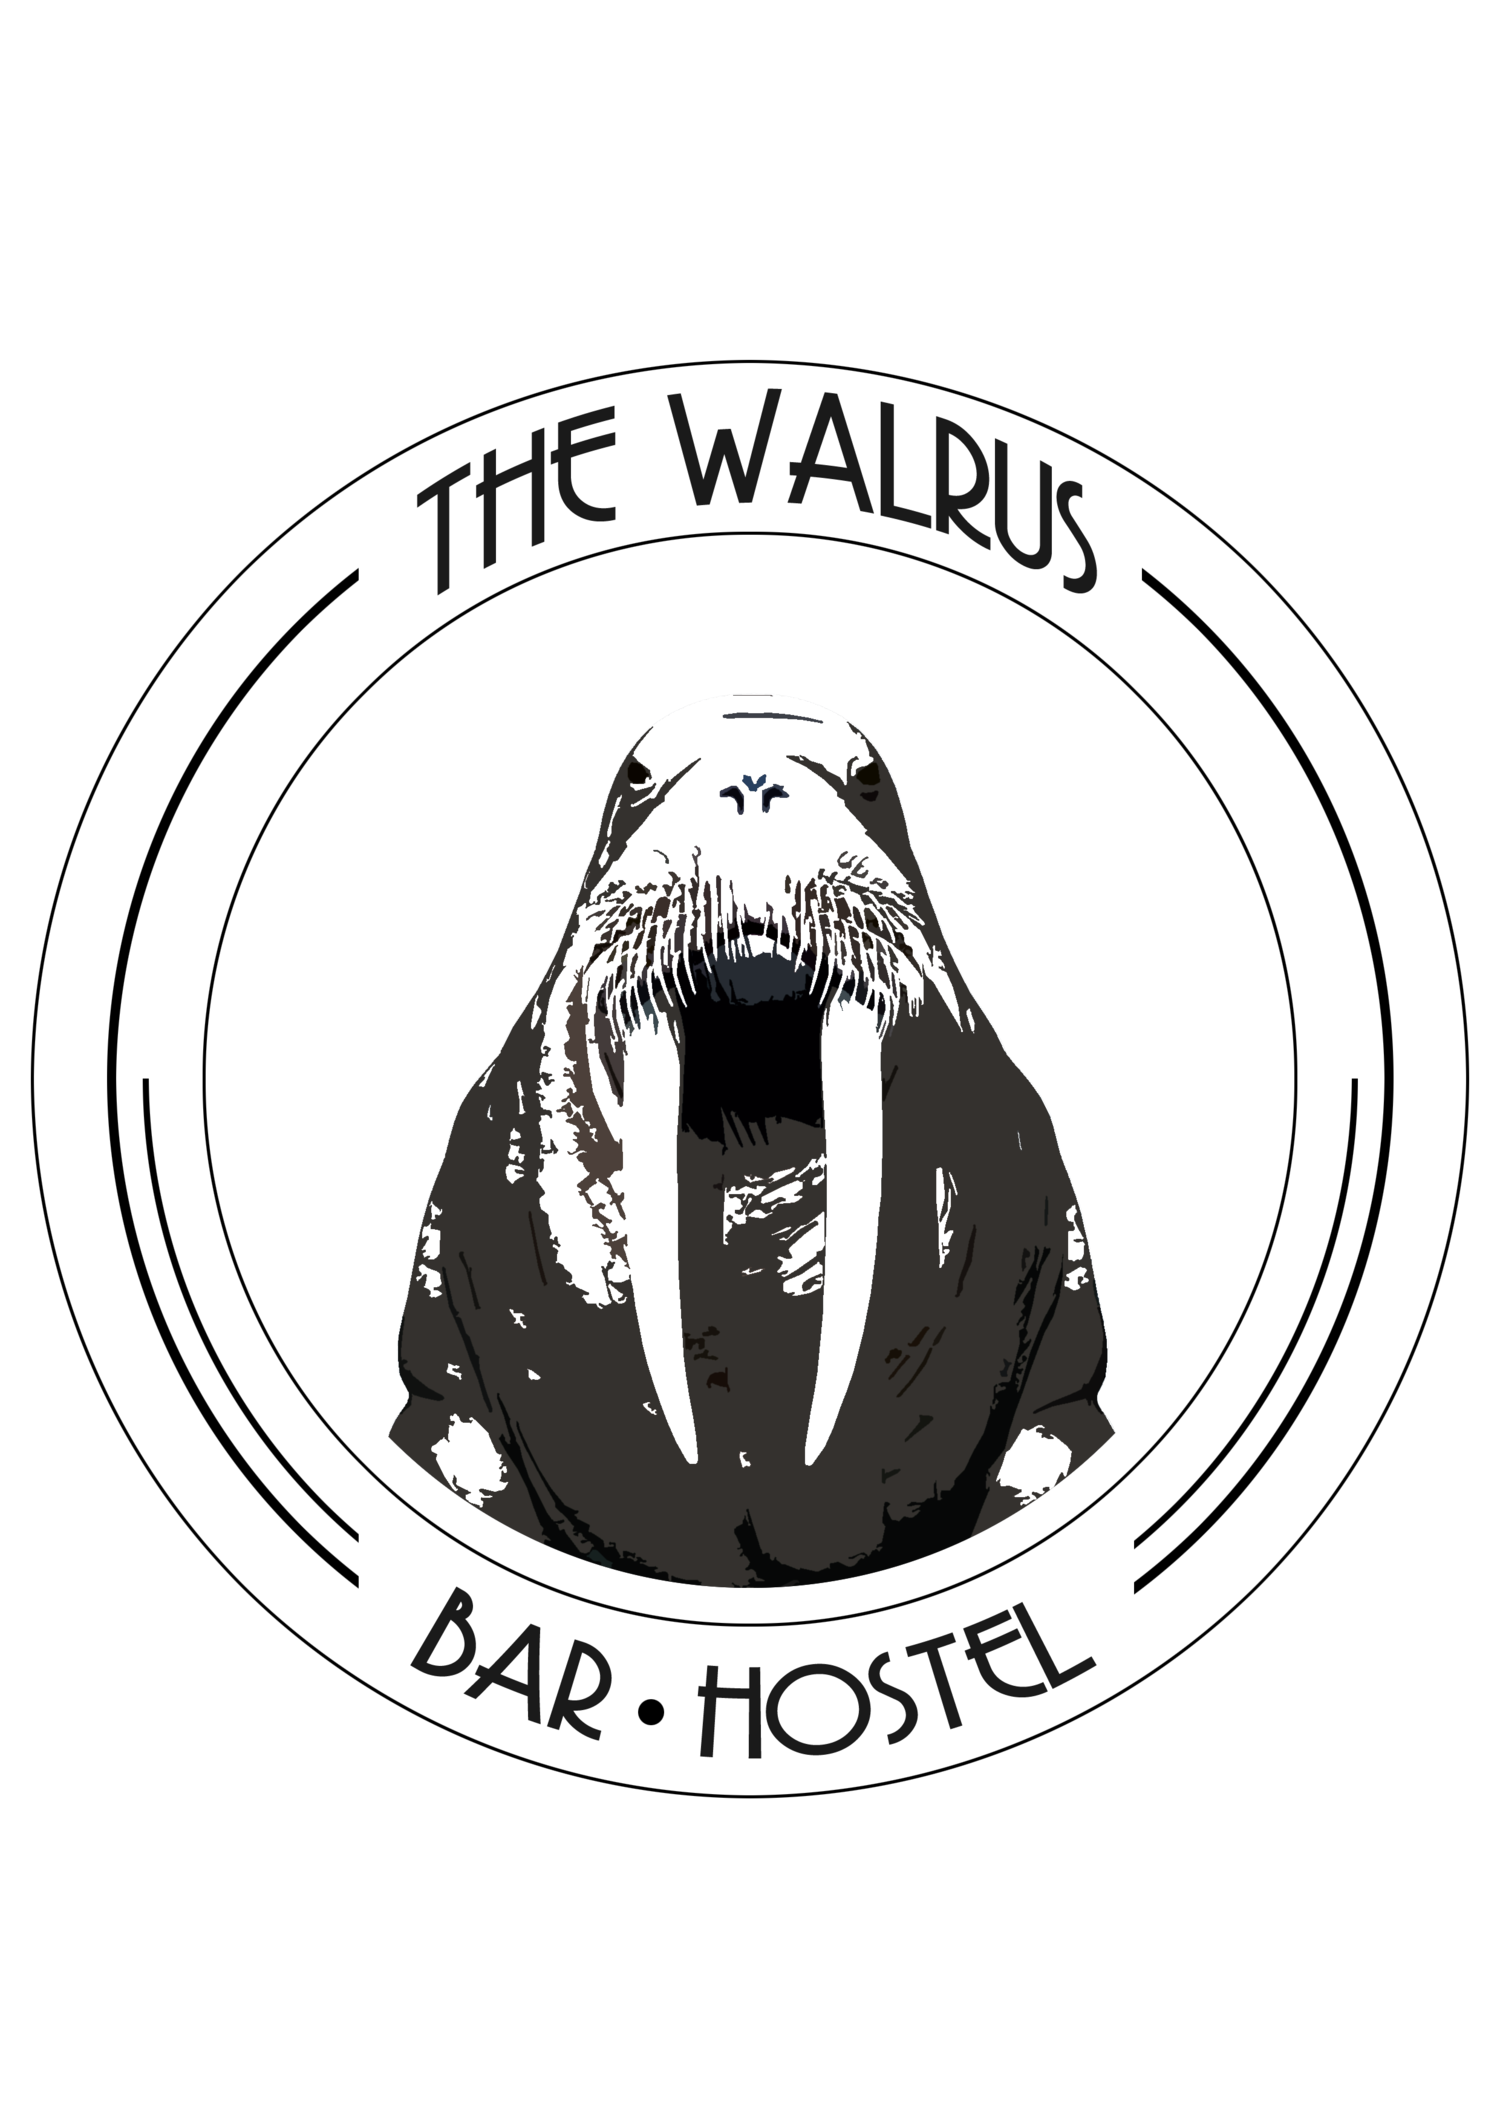 The Walrus Bar & Hostel